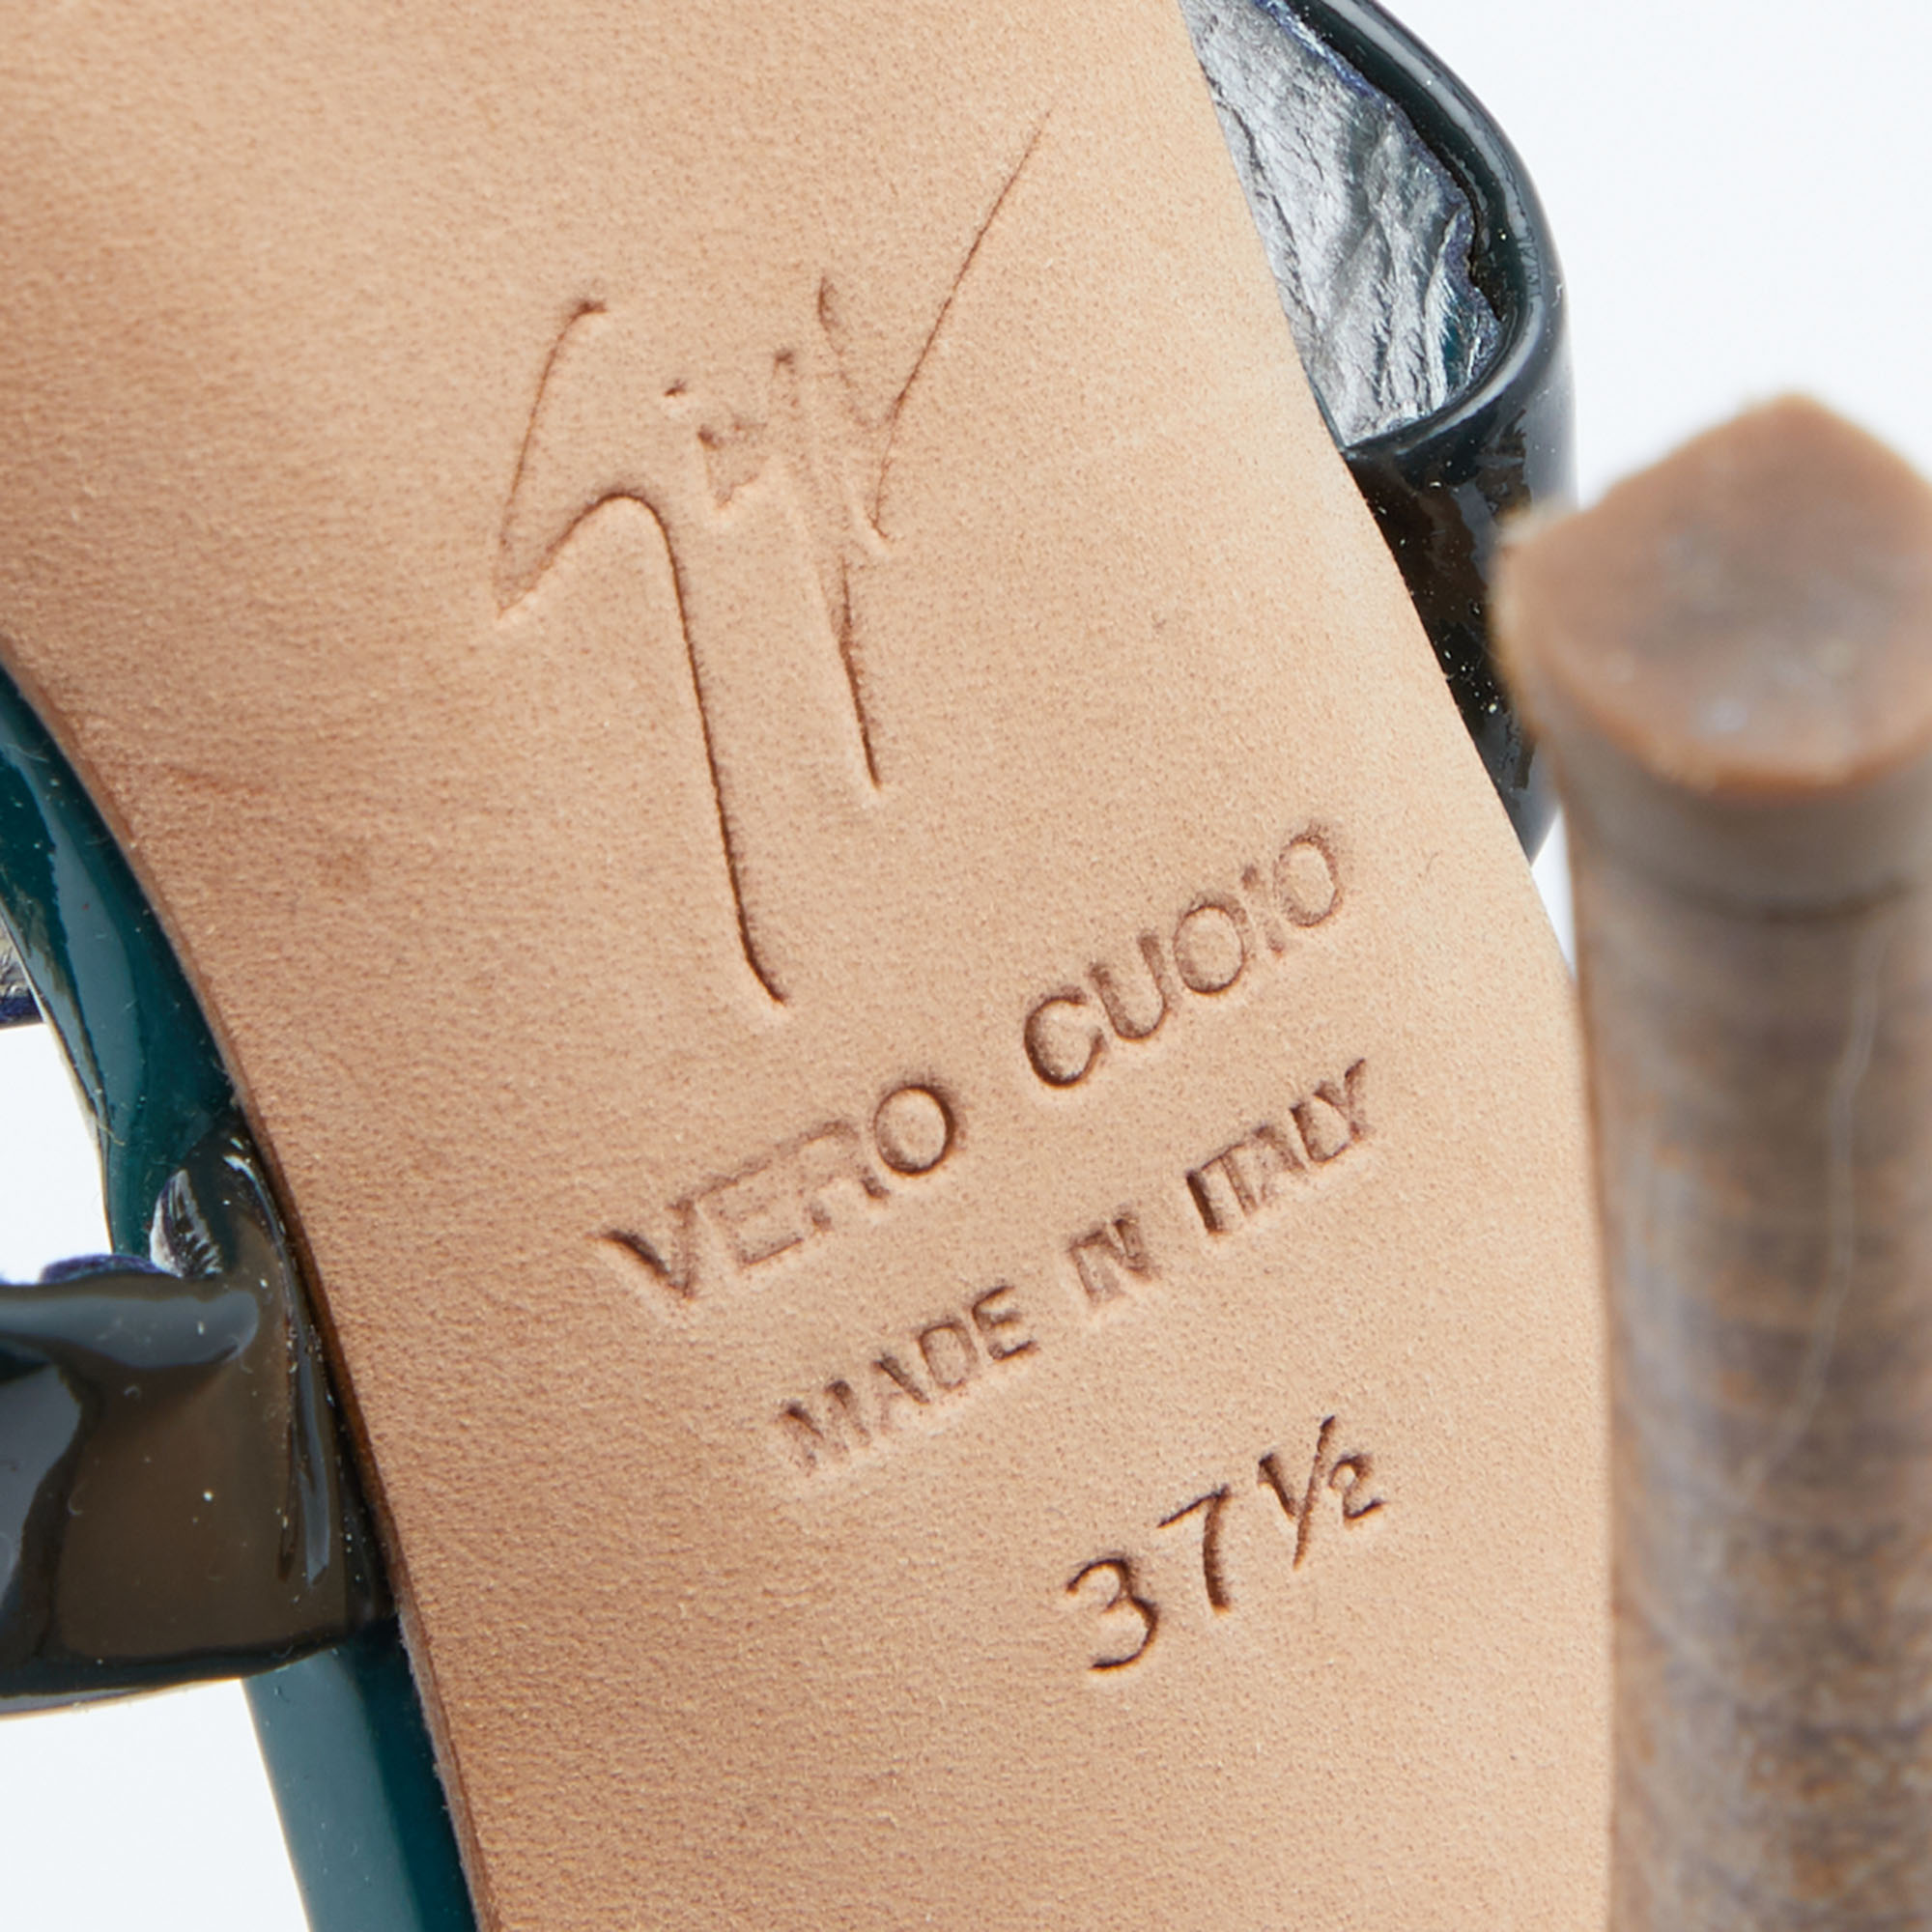 Giuseppe Zanotti Multicolor Patent Leather Crystal Embellished Slingback Sandals Size 37.5